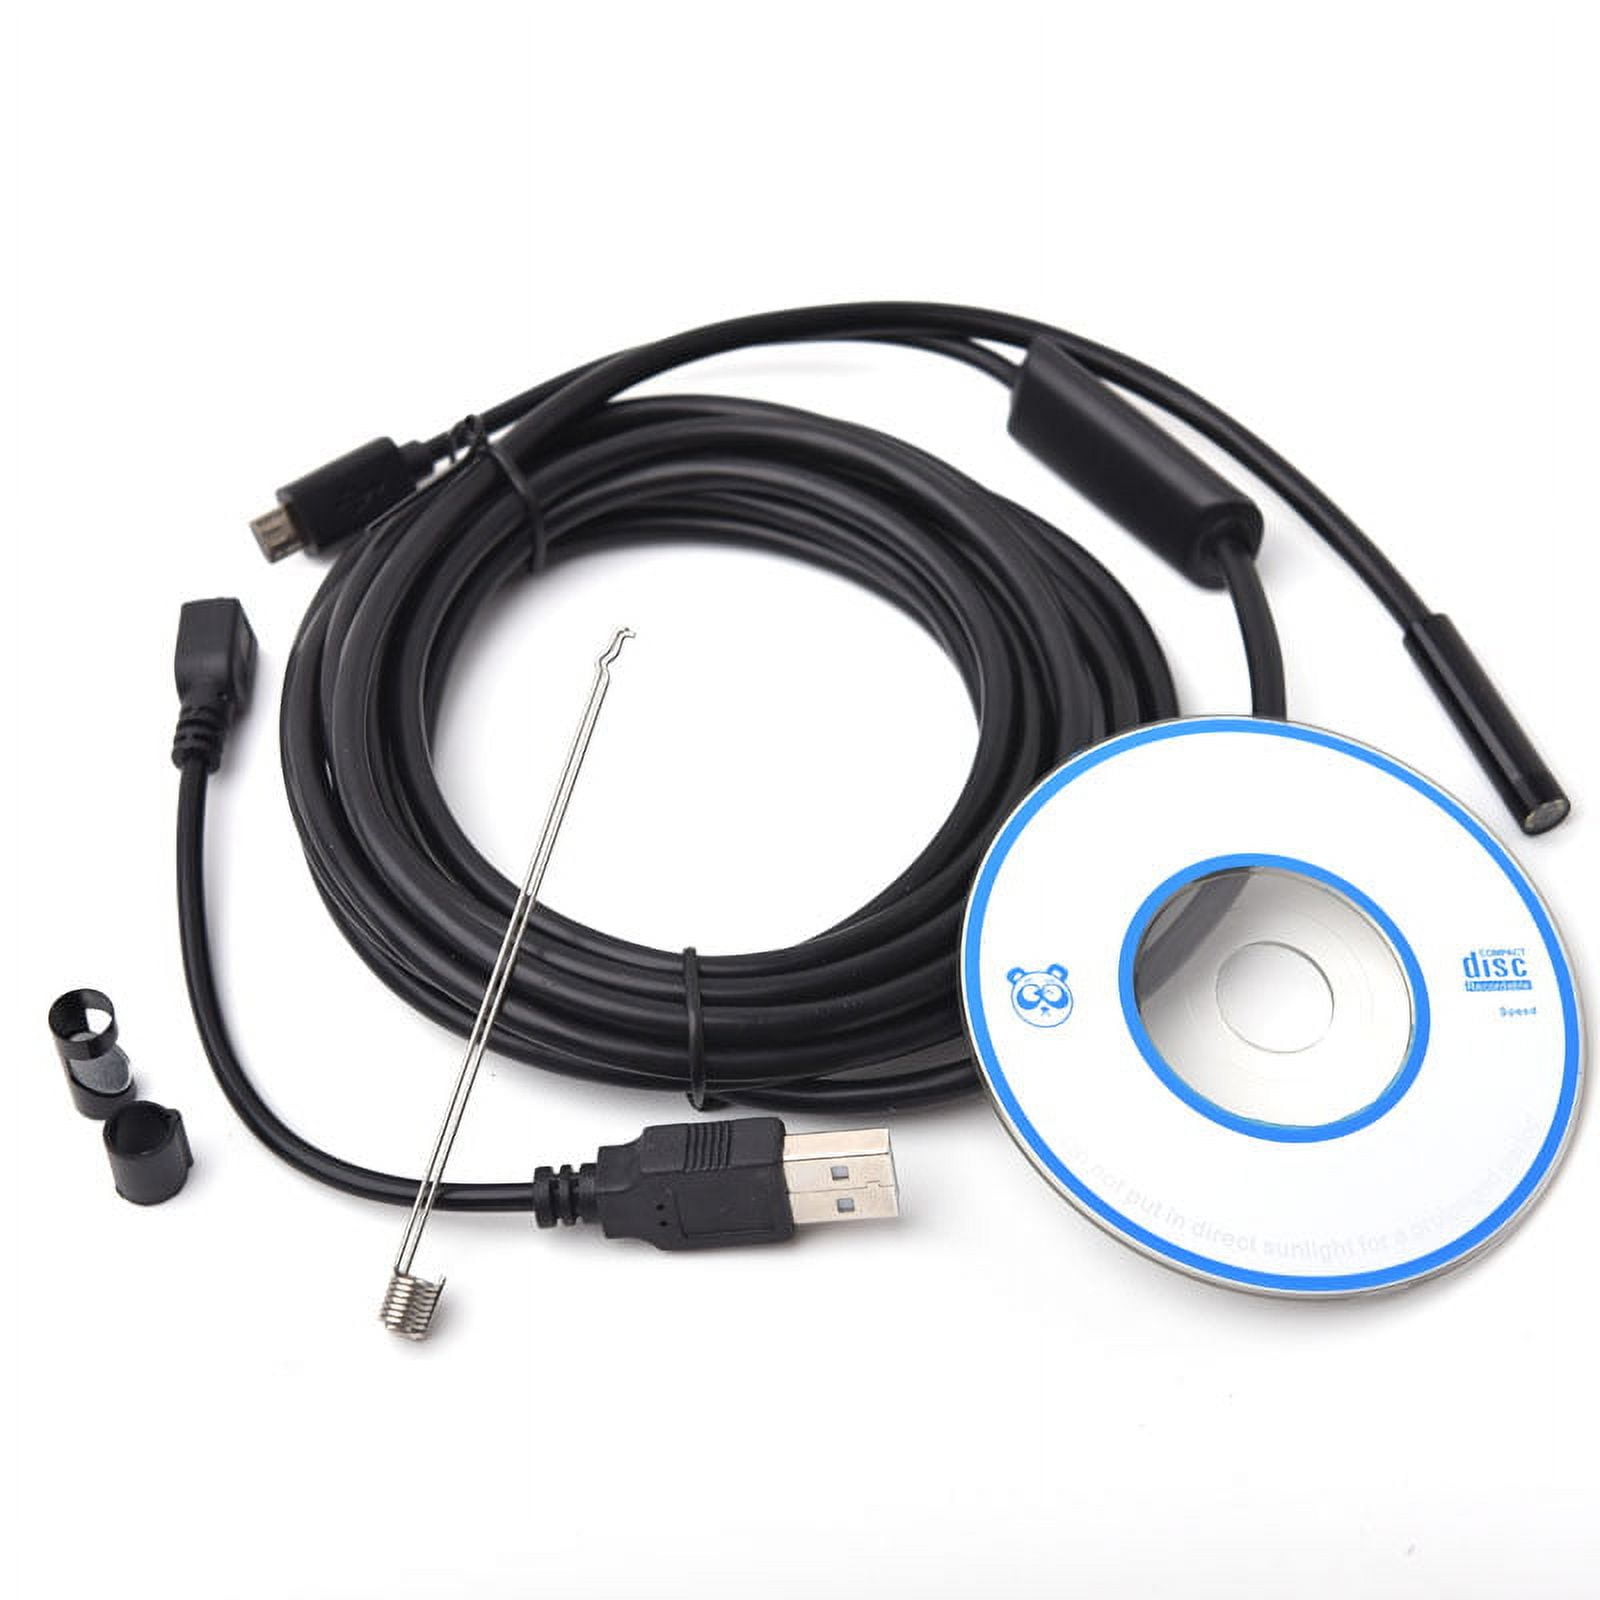 Mini Camera Endoscope HD 20M Flexible Tube USB Borescope Inspection for  Android